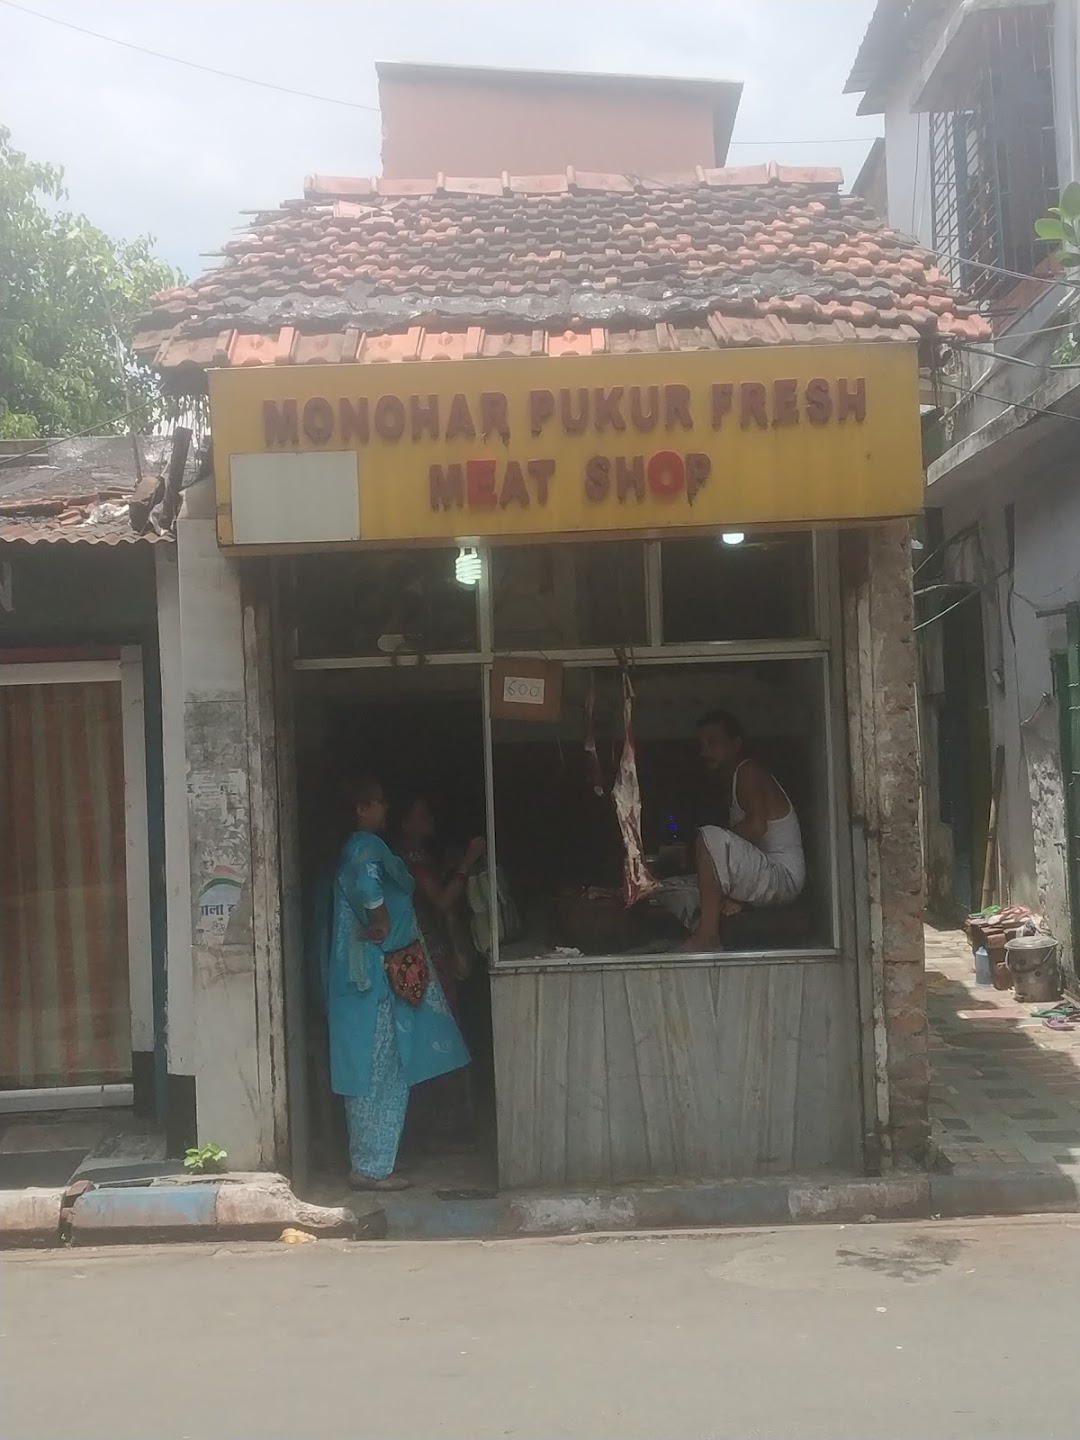 Monohar Pukur Fresh Meat Shop